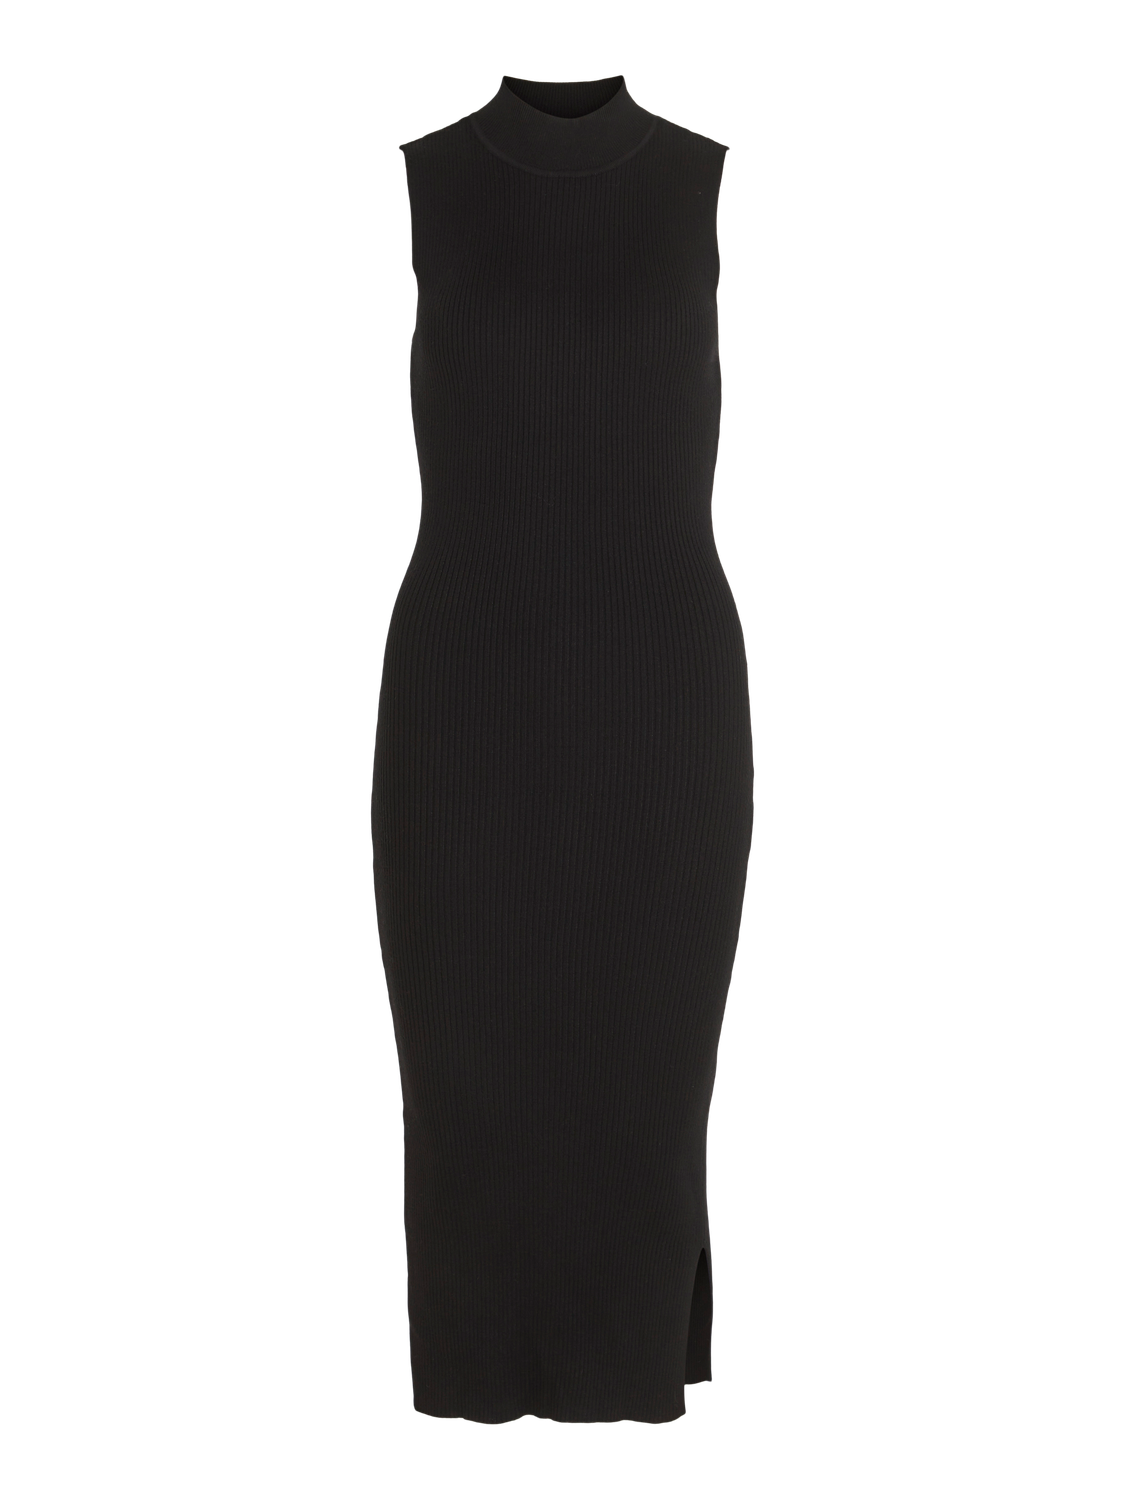 VISTYLIE Dress - Black